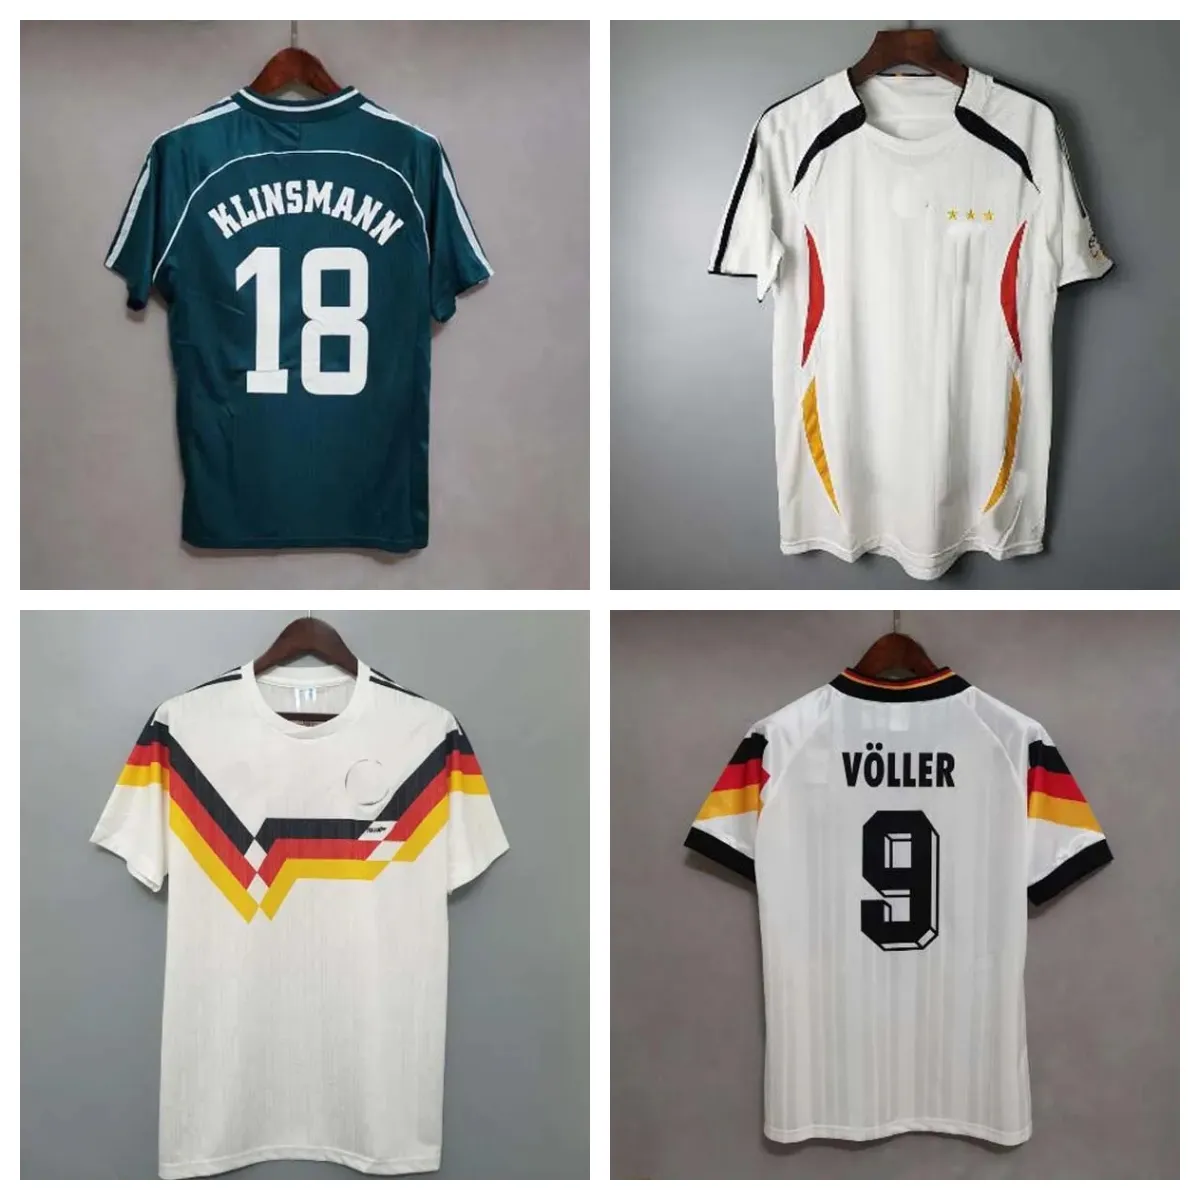 VM 1990 1998 1988 1996 Germanys Retro Littbarski Ballack Soccer Jersey Klinsmann 2016 2006 2014 Skjortor Kalkbrenner 1996 2004 Jersey Sport Set